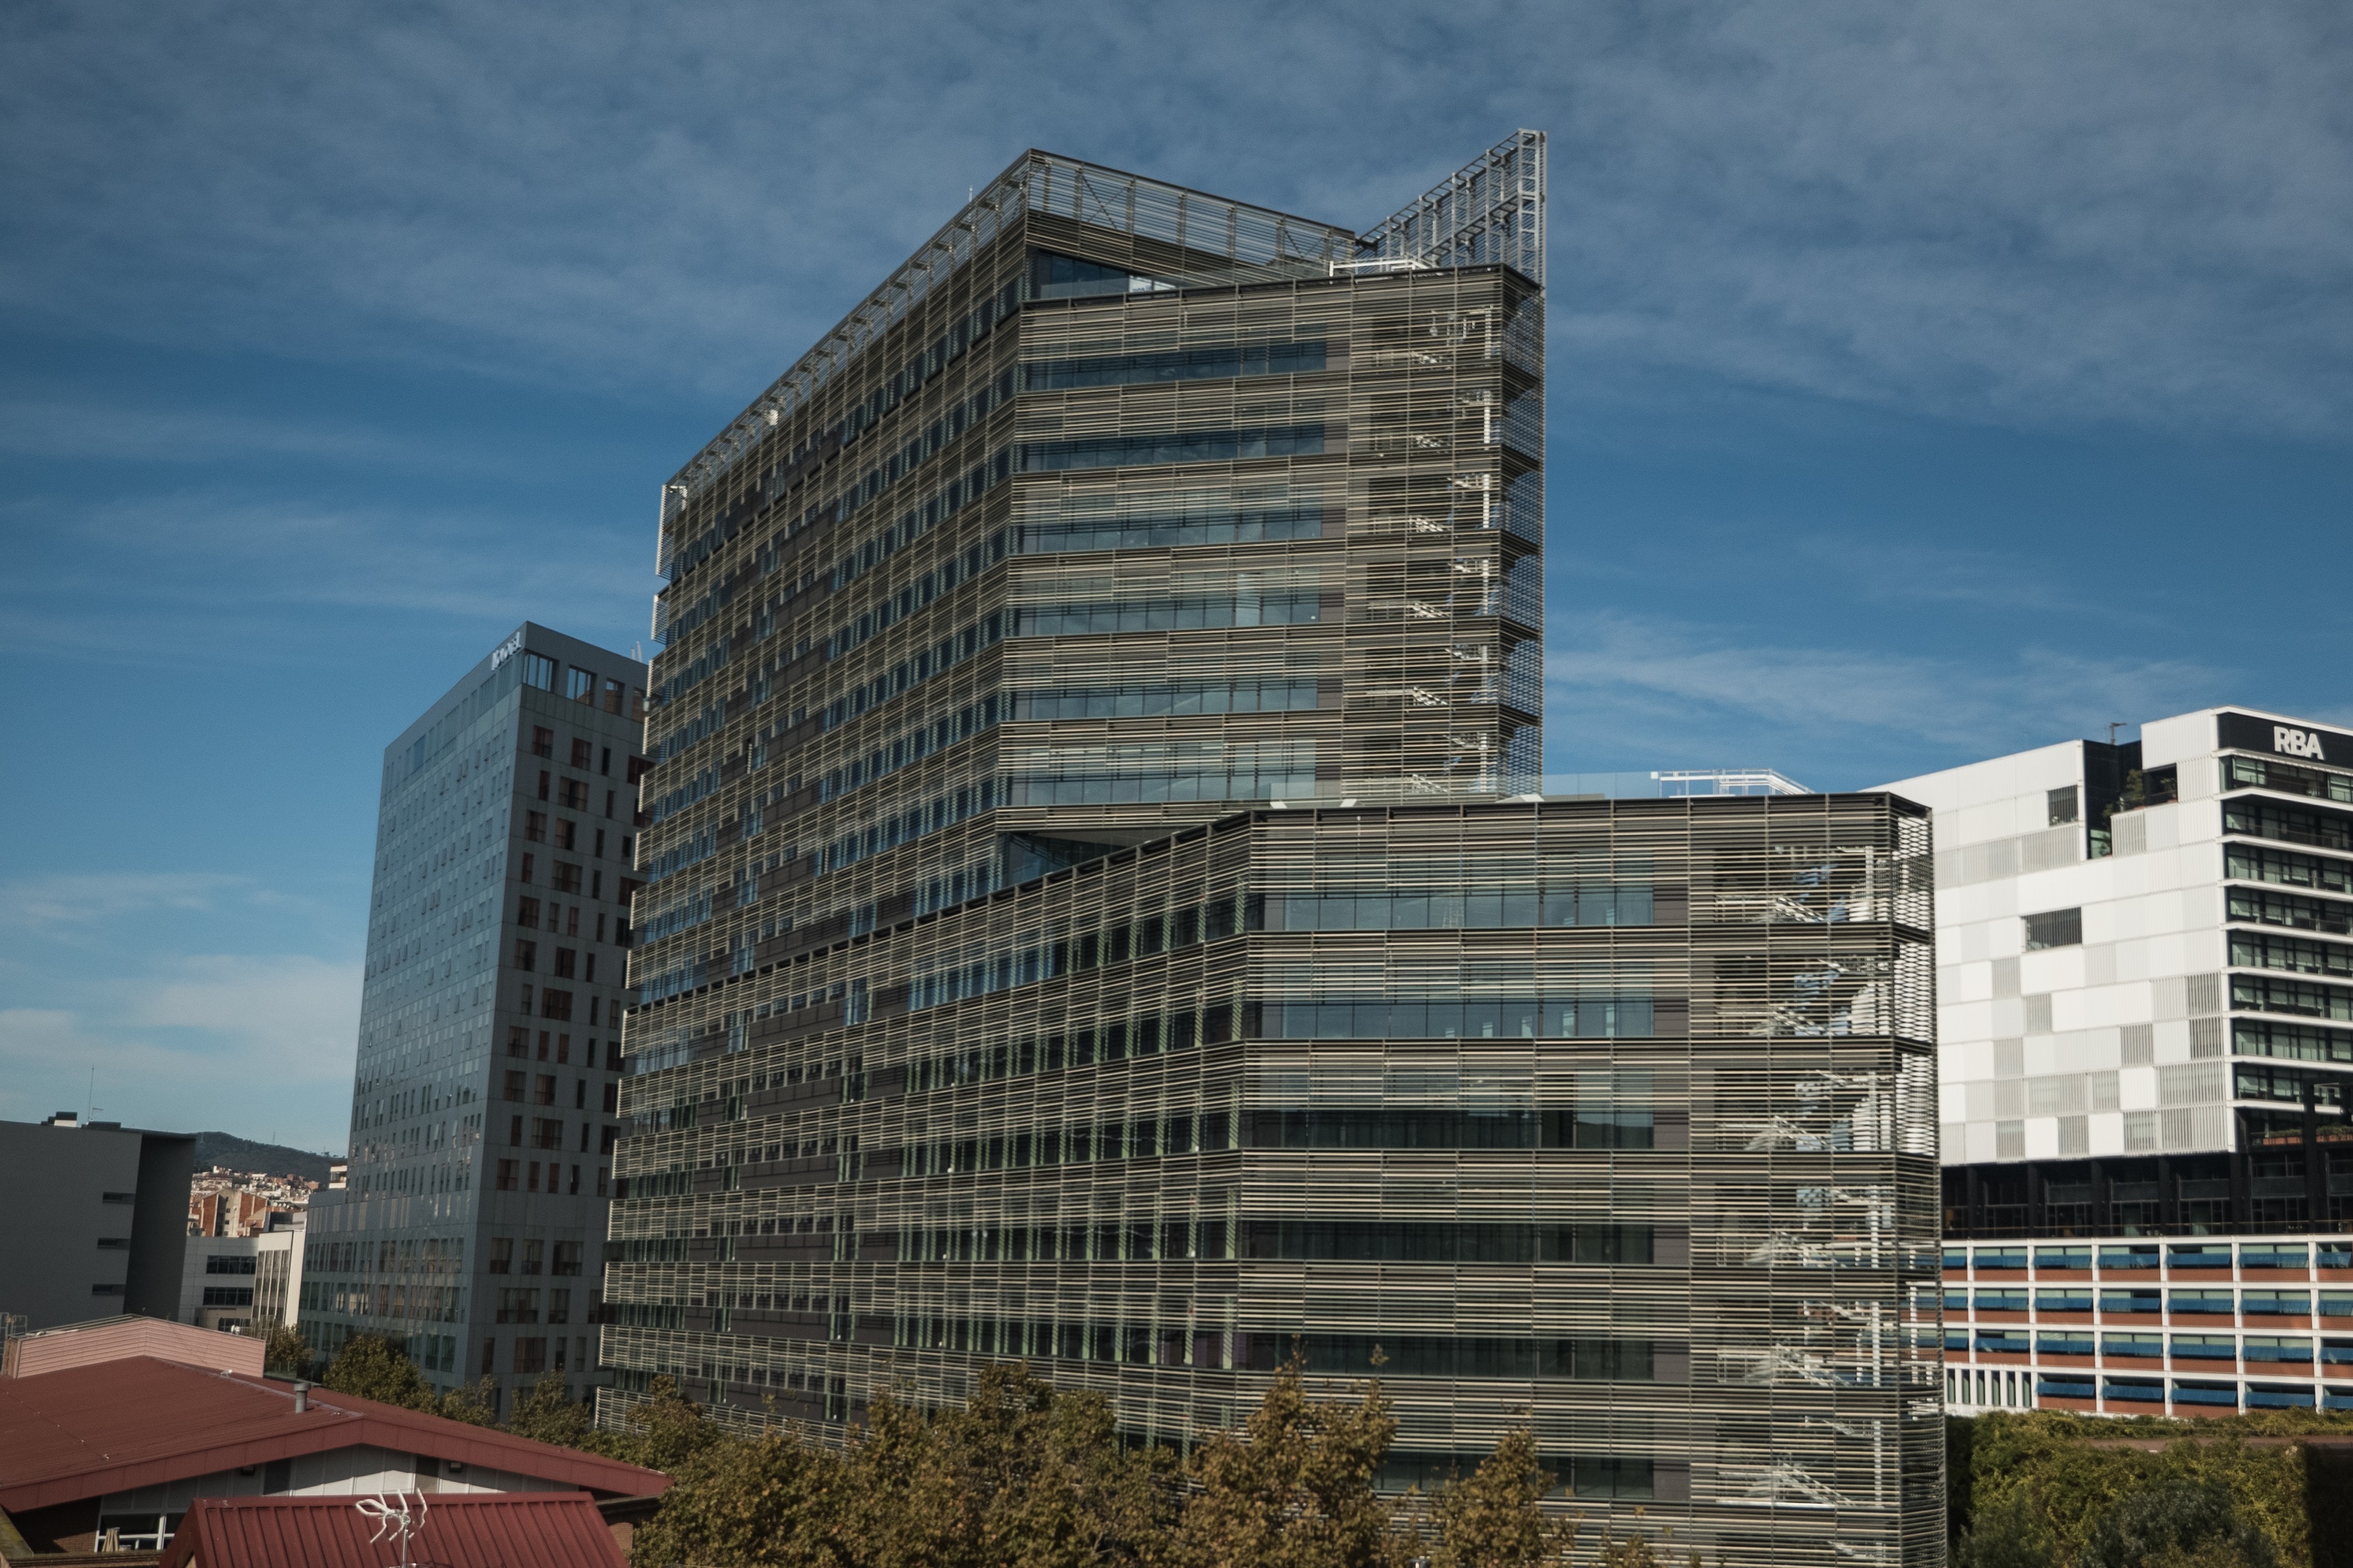 CIUTAT DE GRANADA 150 OFFICE BUILDING , BARCELONA